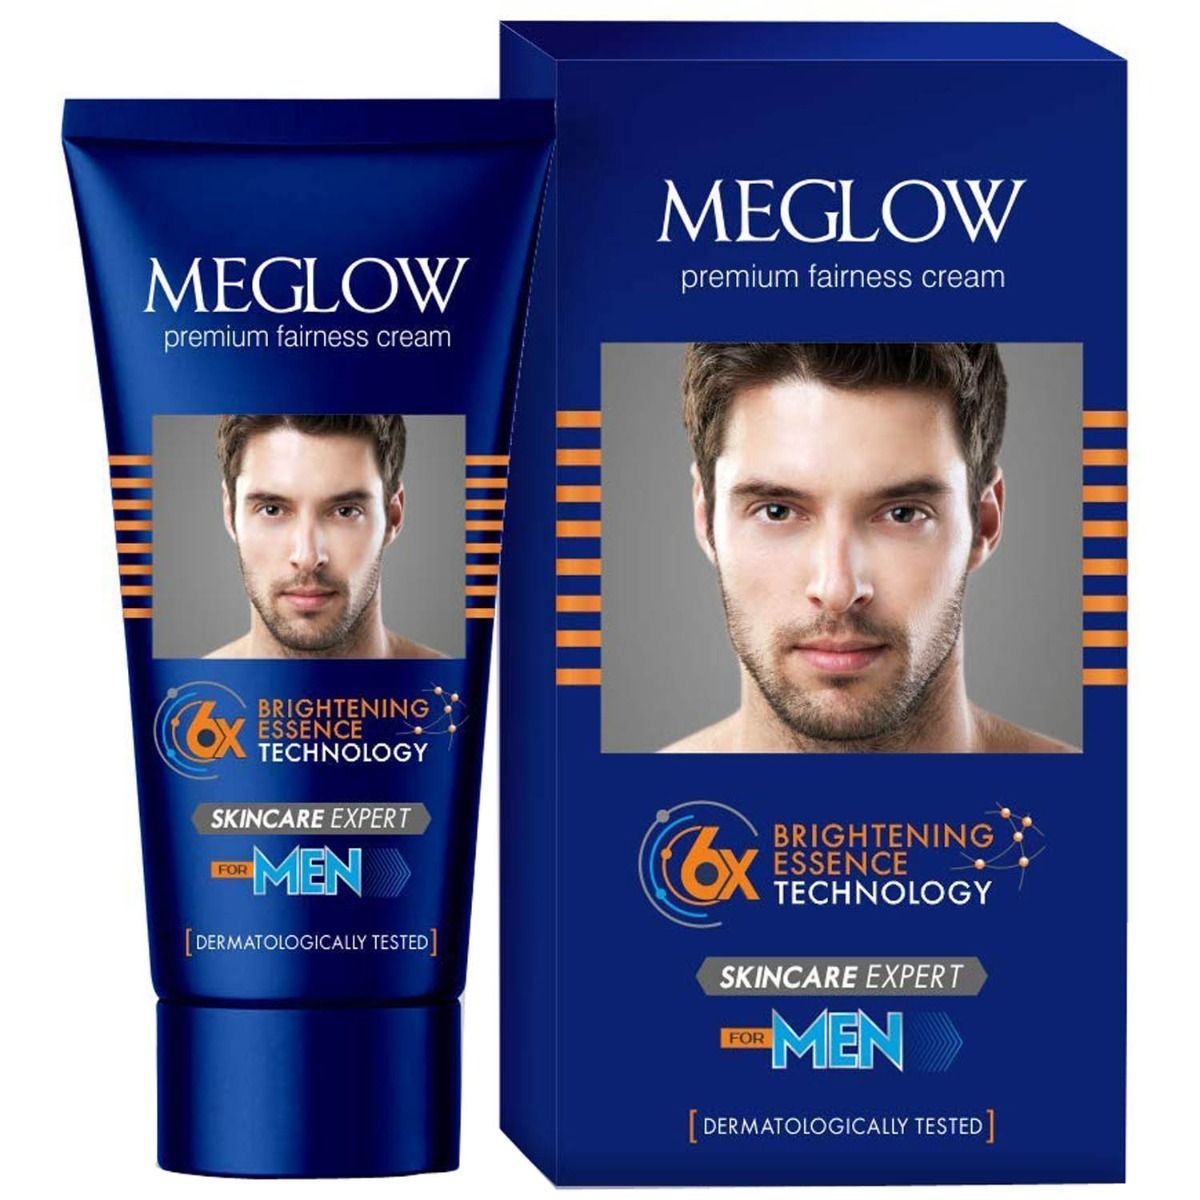 Meglow Fairness Cream For Men, 50 gm, Pack of 1 